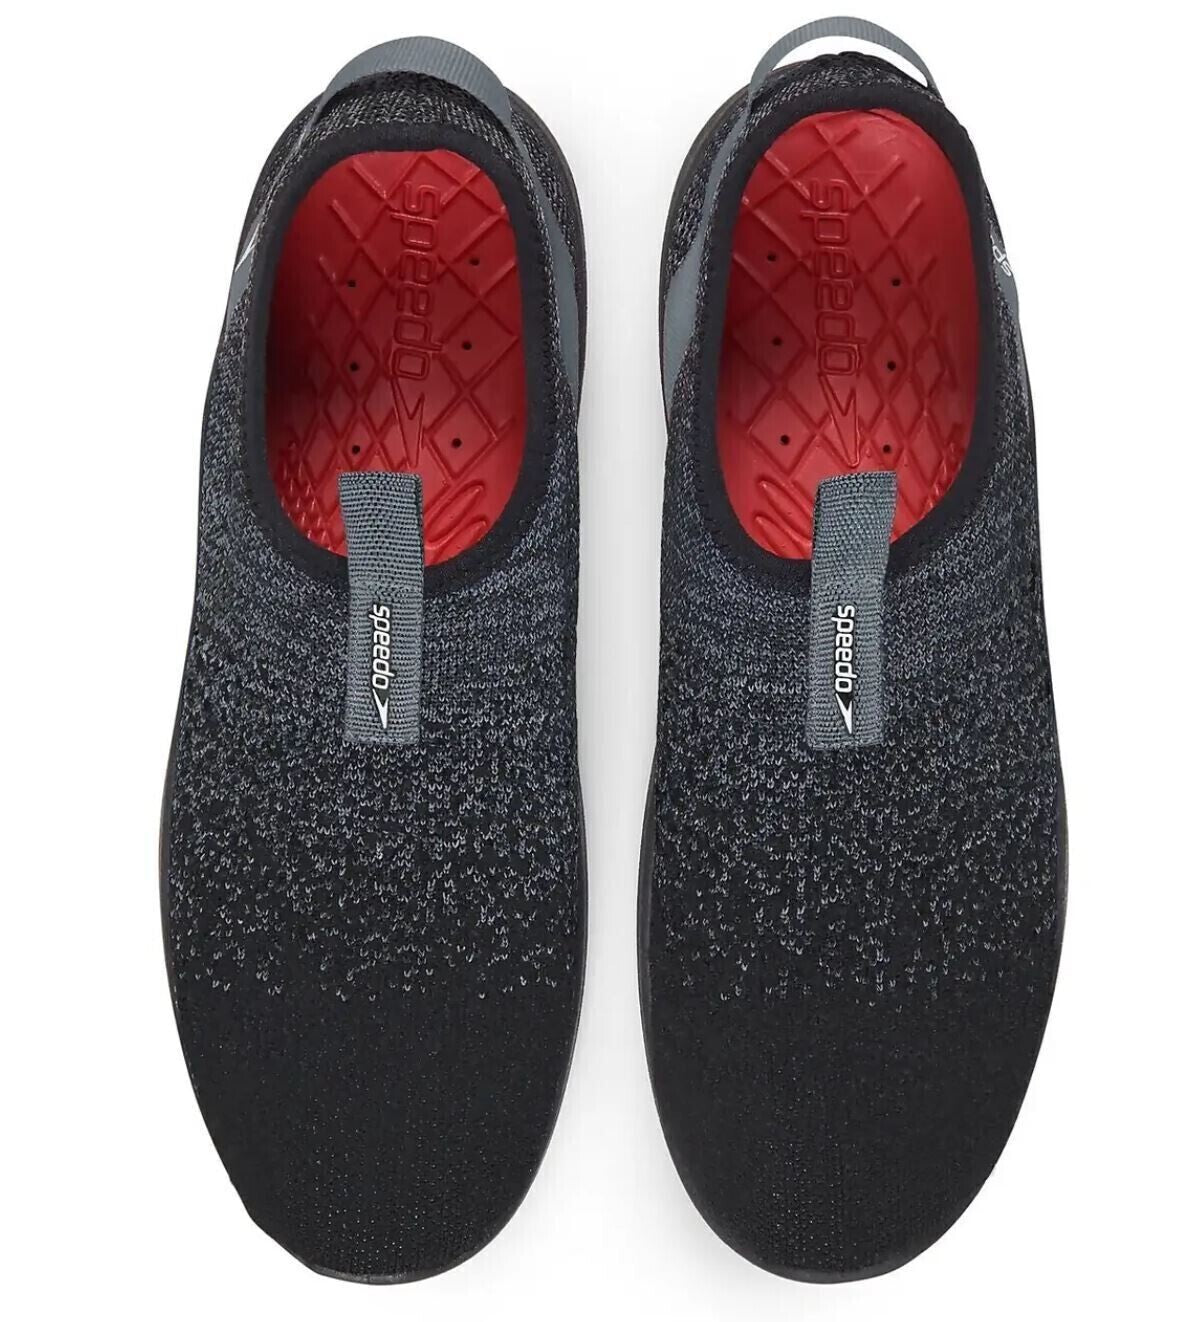 Speedo Men's Black/Gray Size 11 Surf Knit Pro Water Shoes